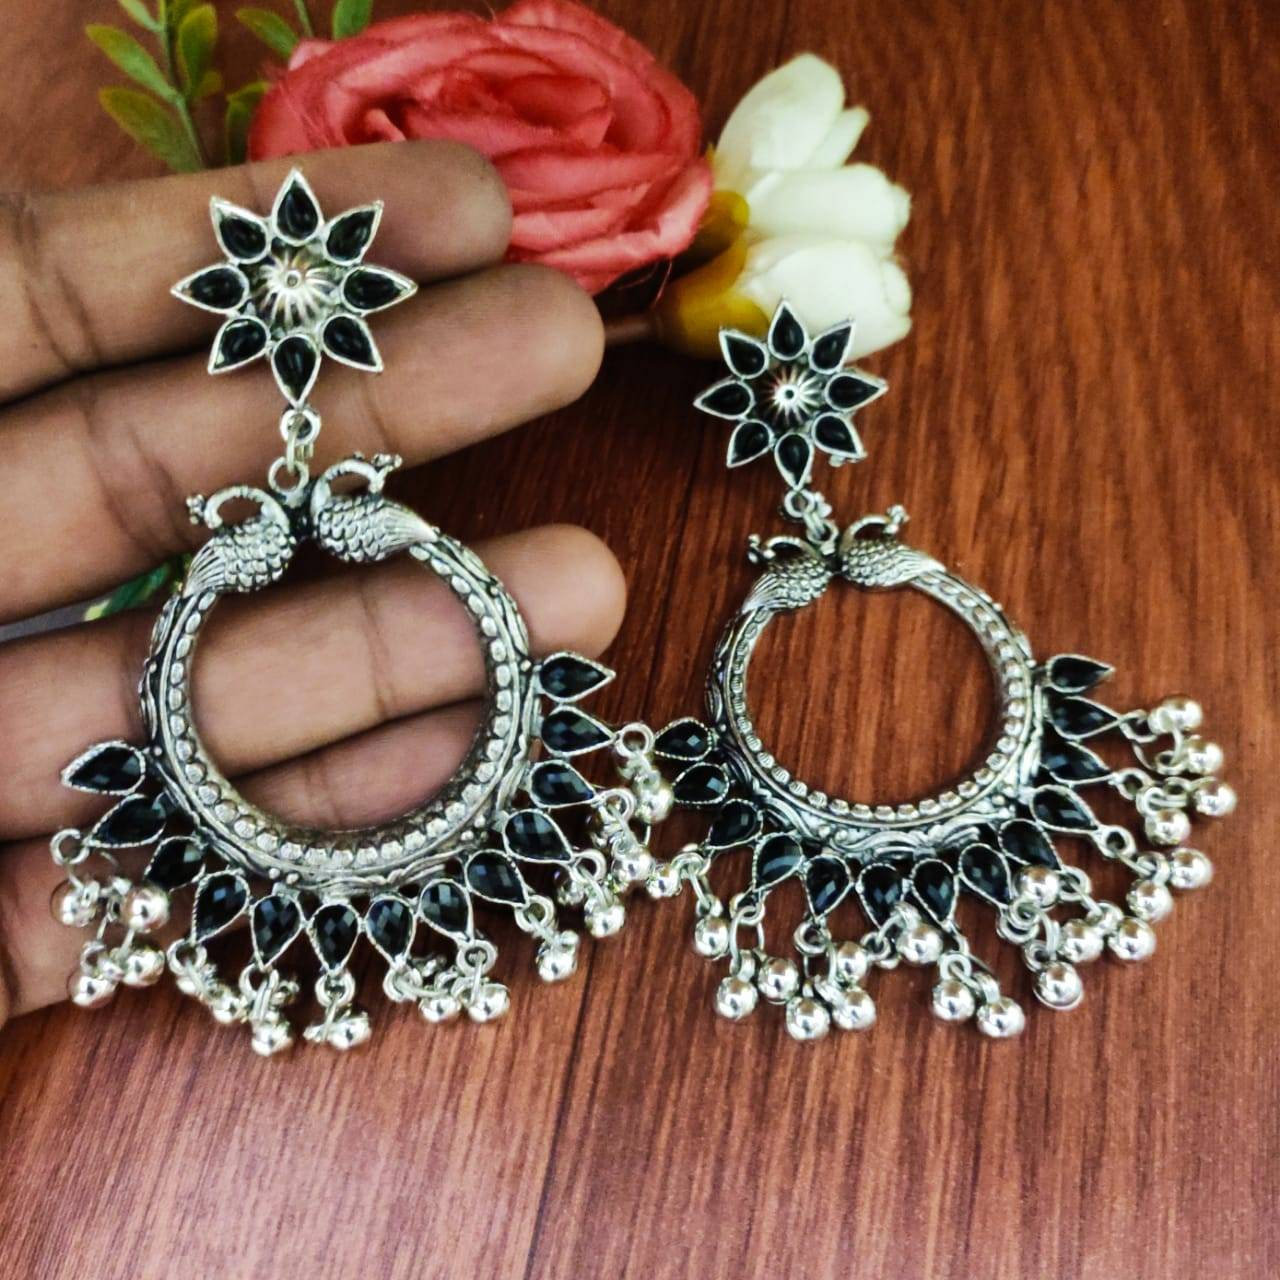 Oxidized Earrings, Peacock Design Ghungroo Round Earrings, Indian Ethnic Earrings, Boho Tribal Earrings, Silver Black Earrings